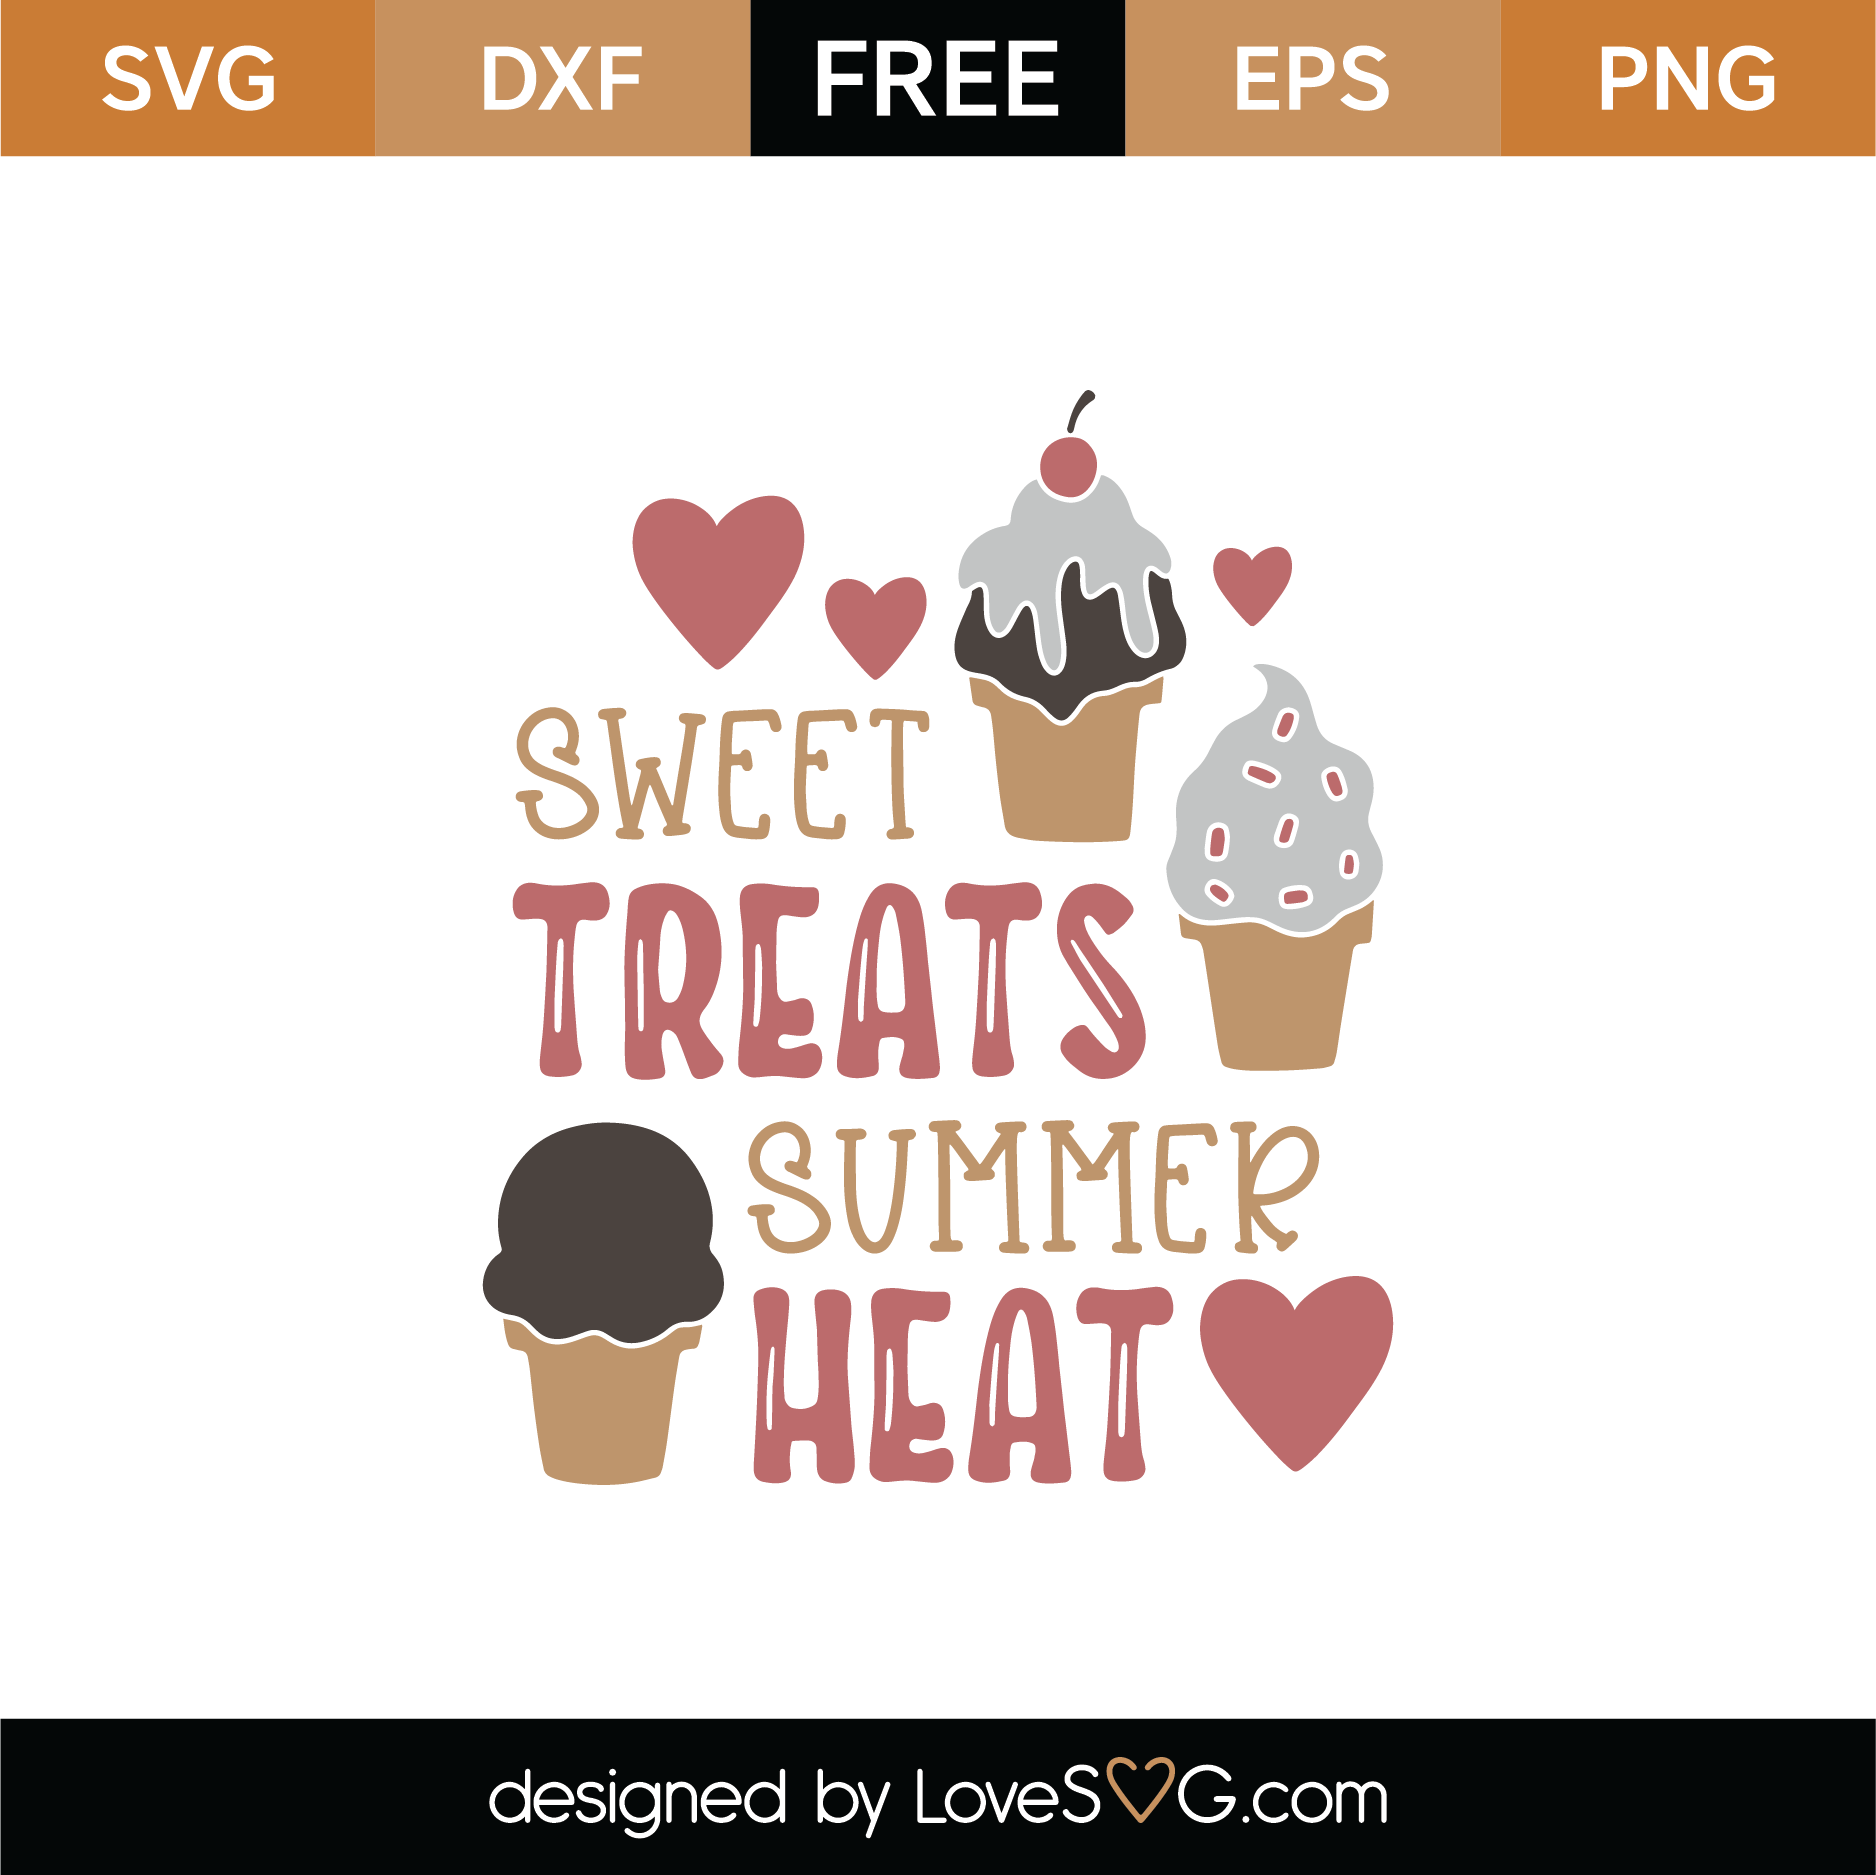 Download Free Sweet Treats Summer Heat SVG Cut File | Lovesvg.com